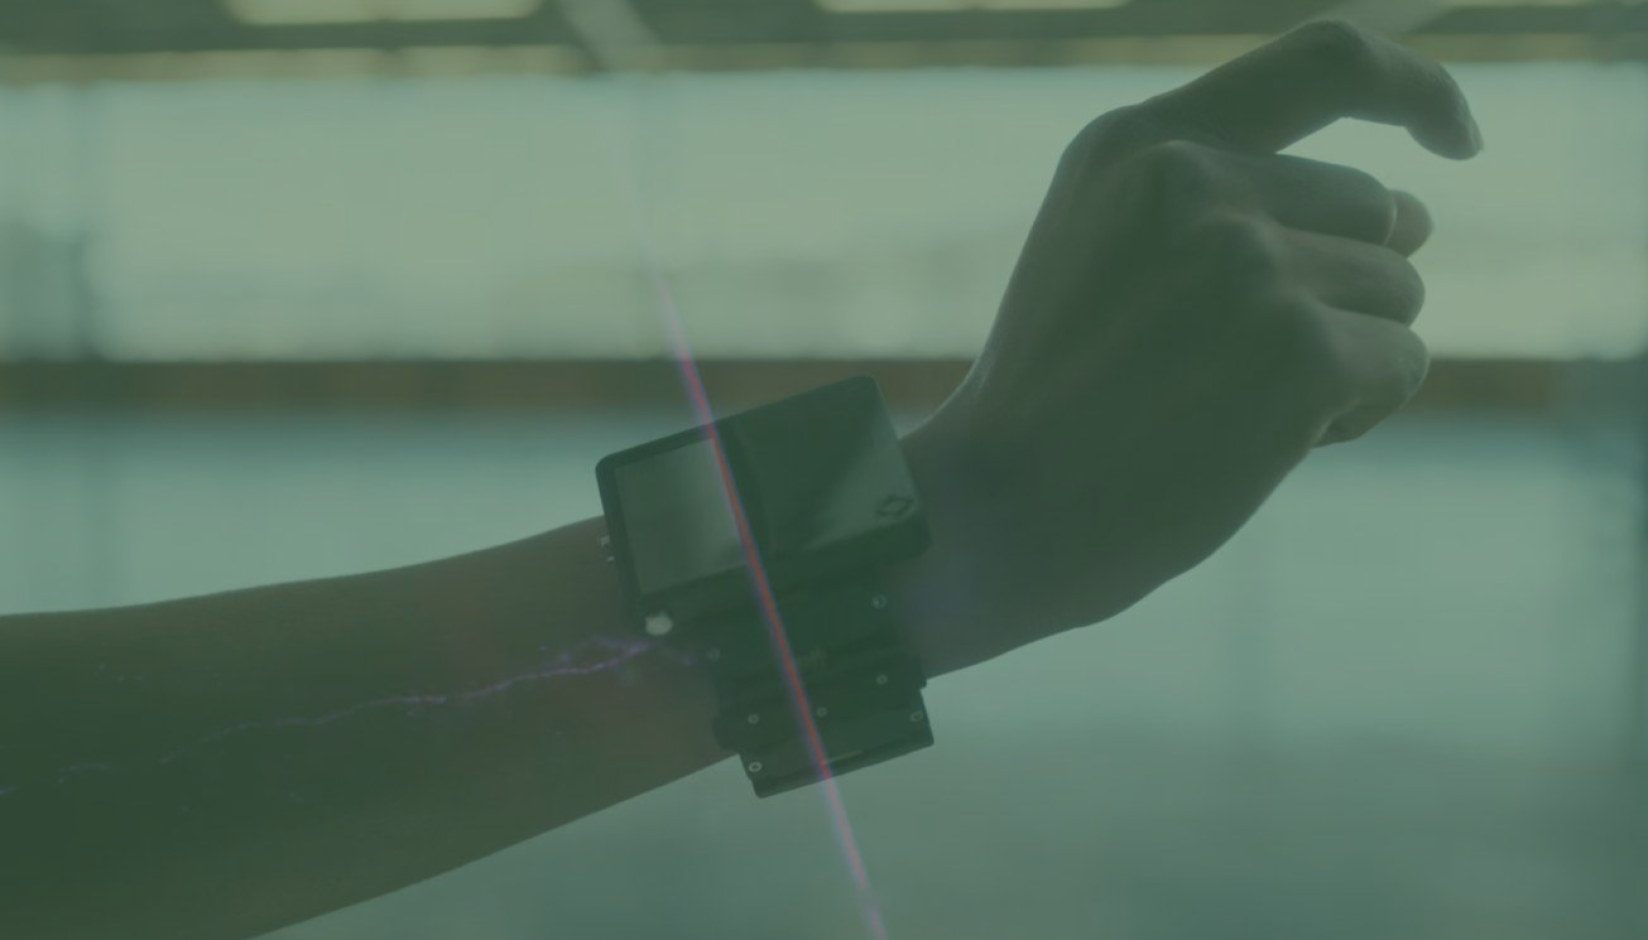 wristband AR sensor on coworking space member's hand